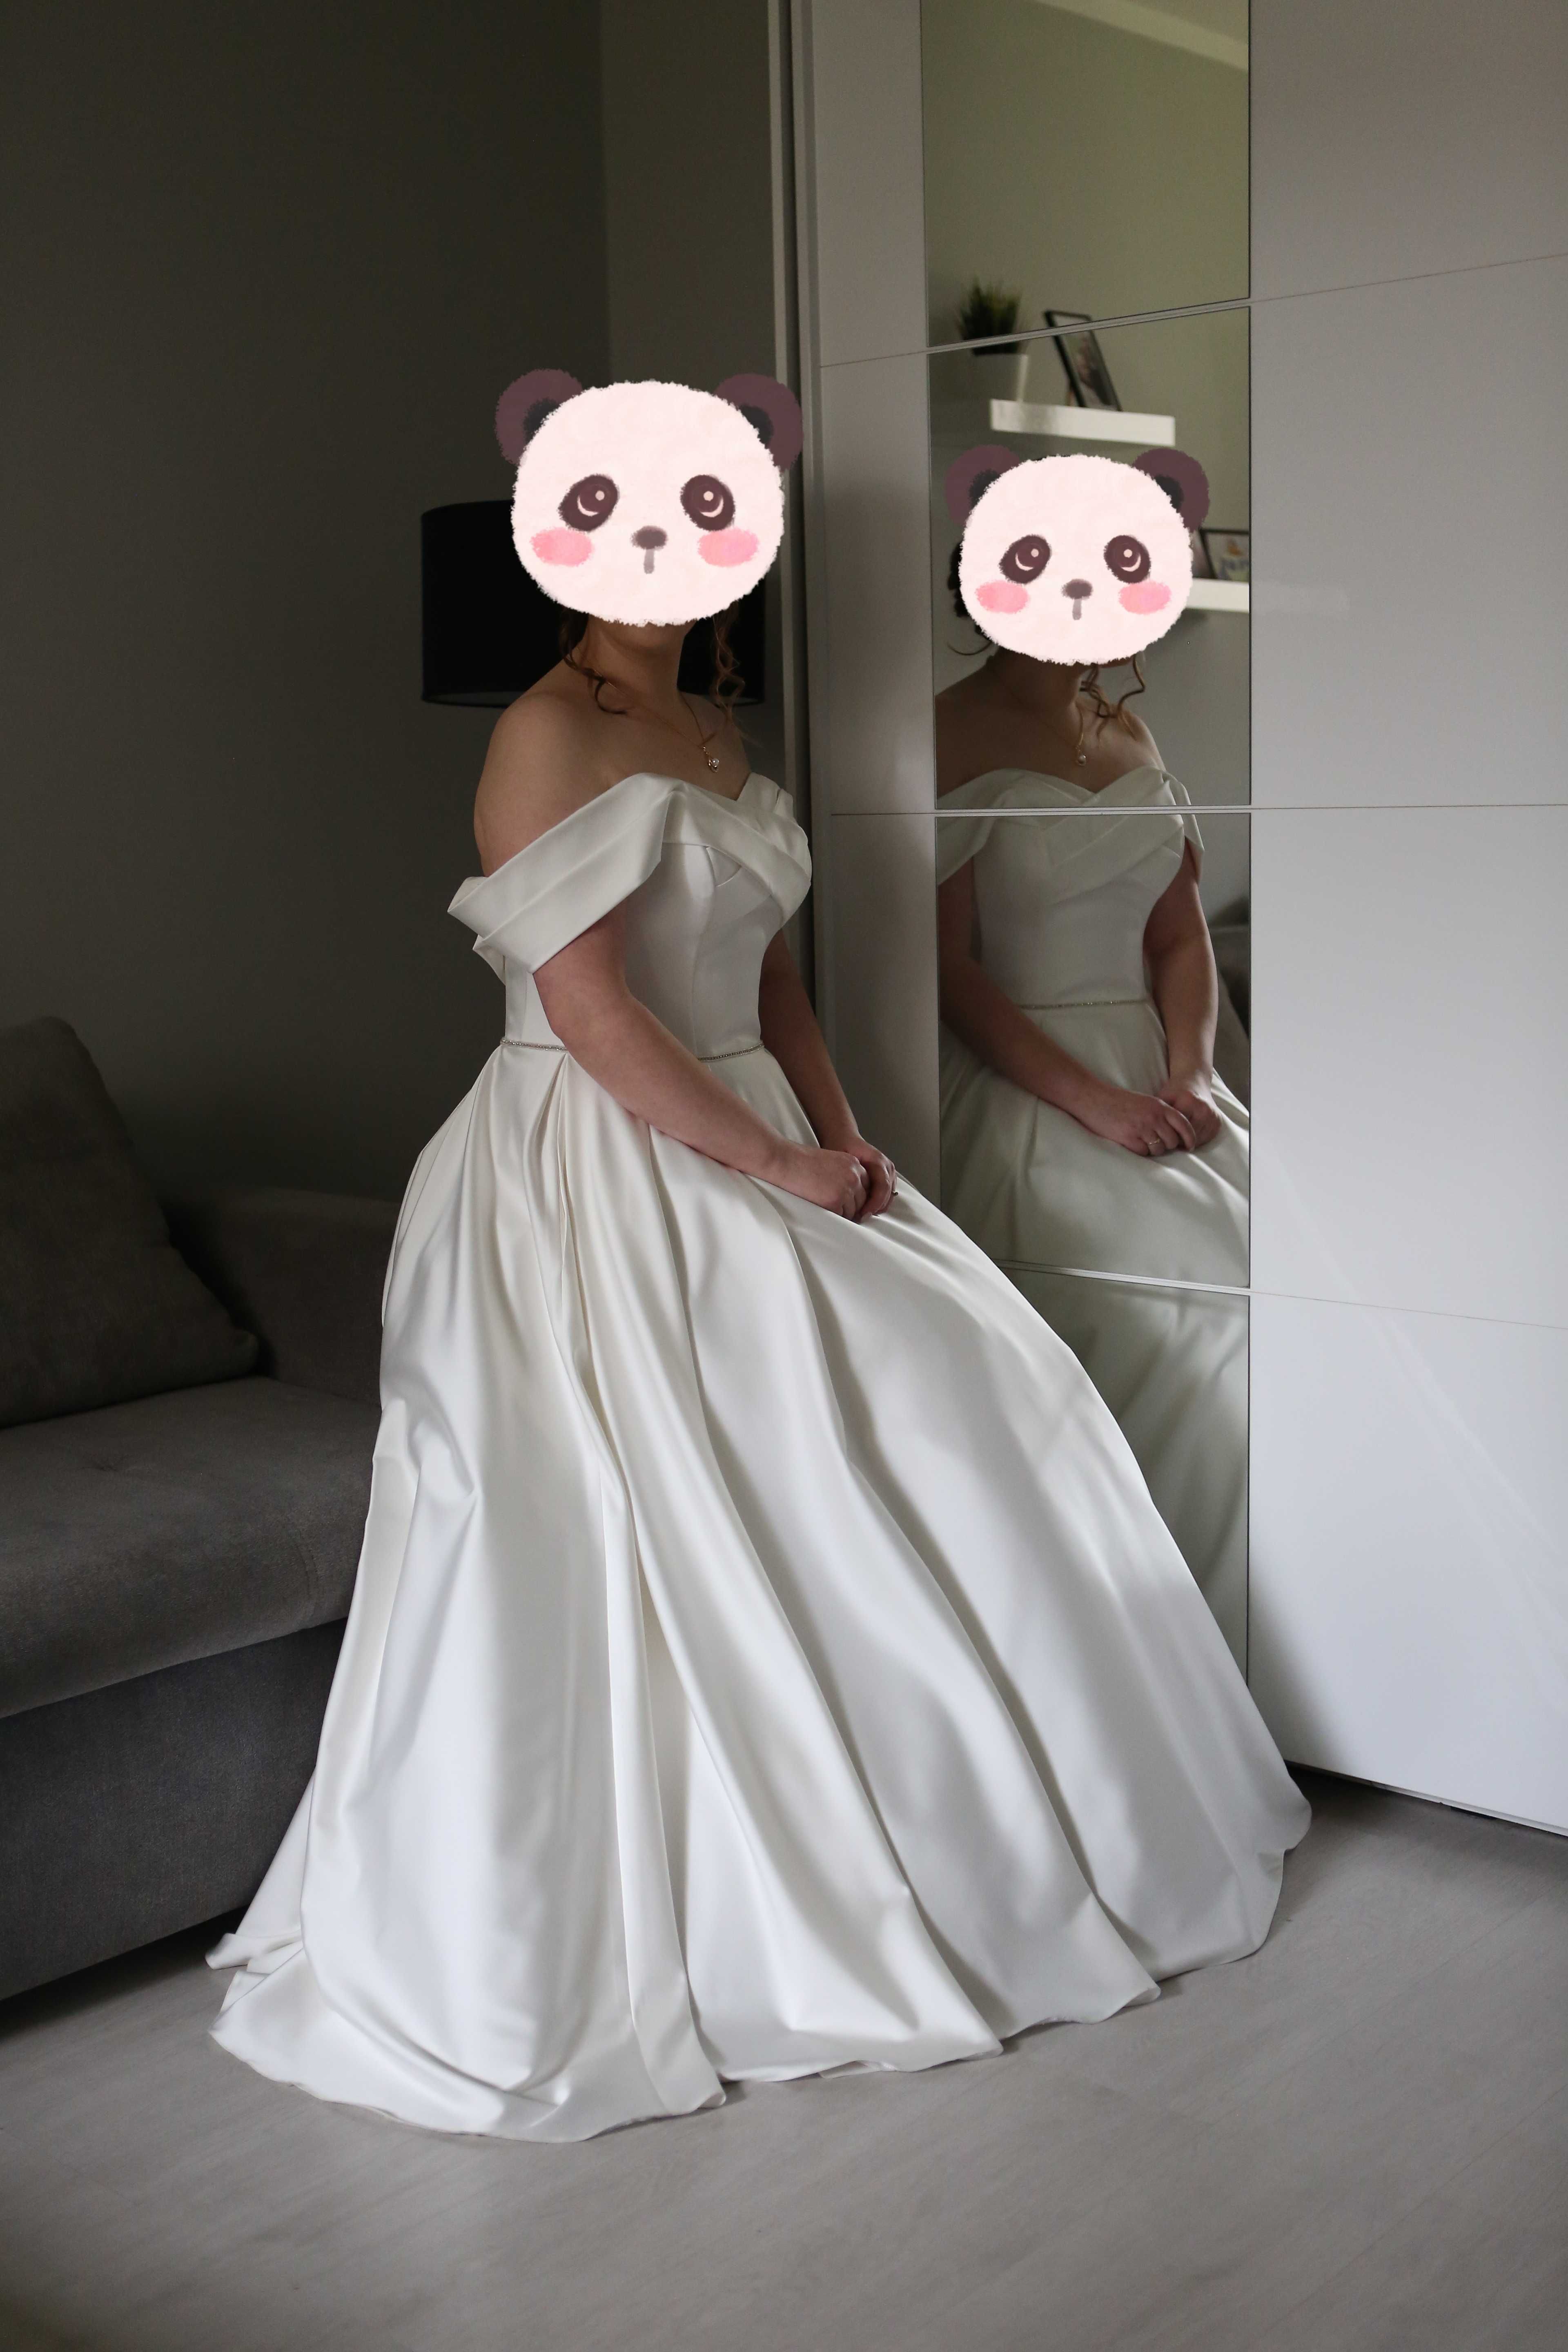 Elegancka suknia ślubna